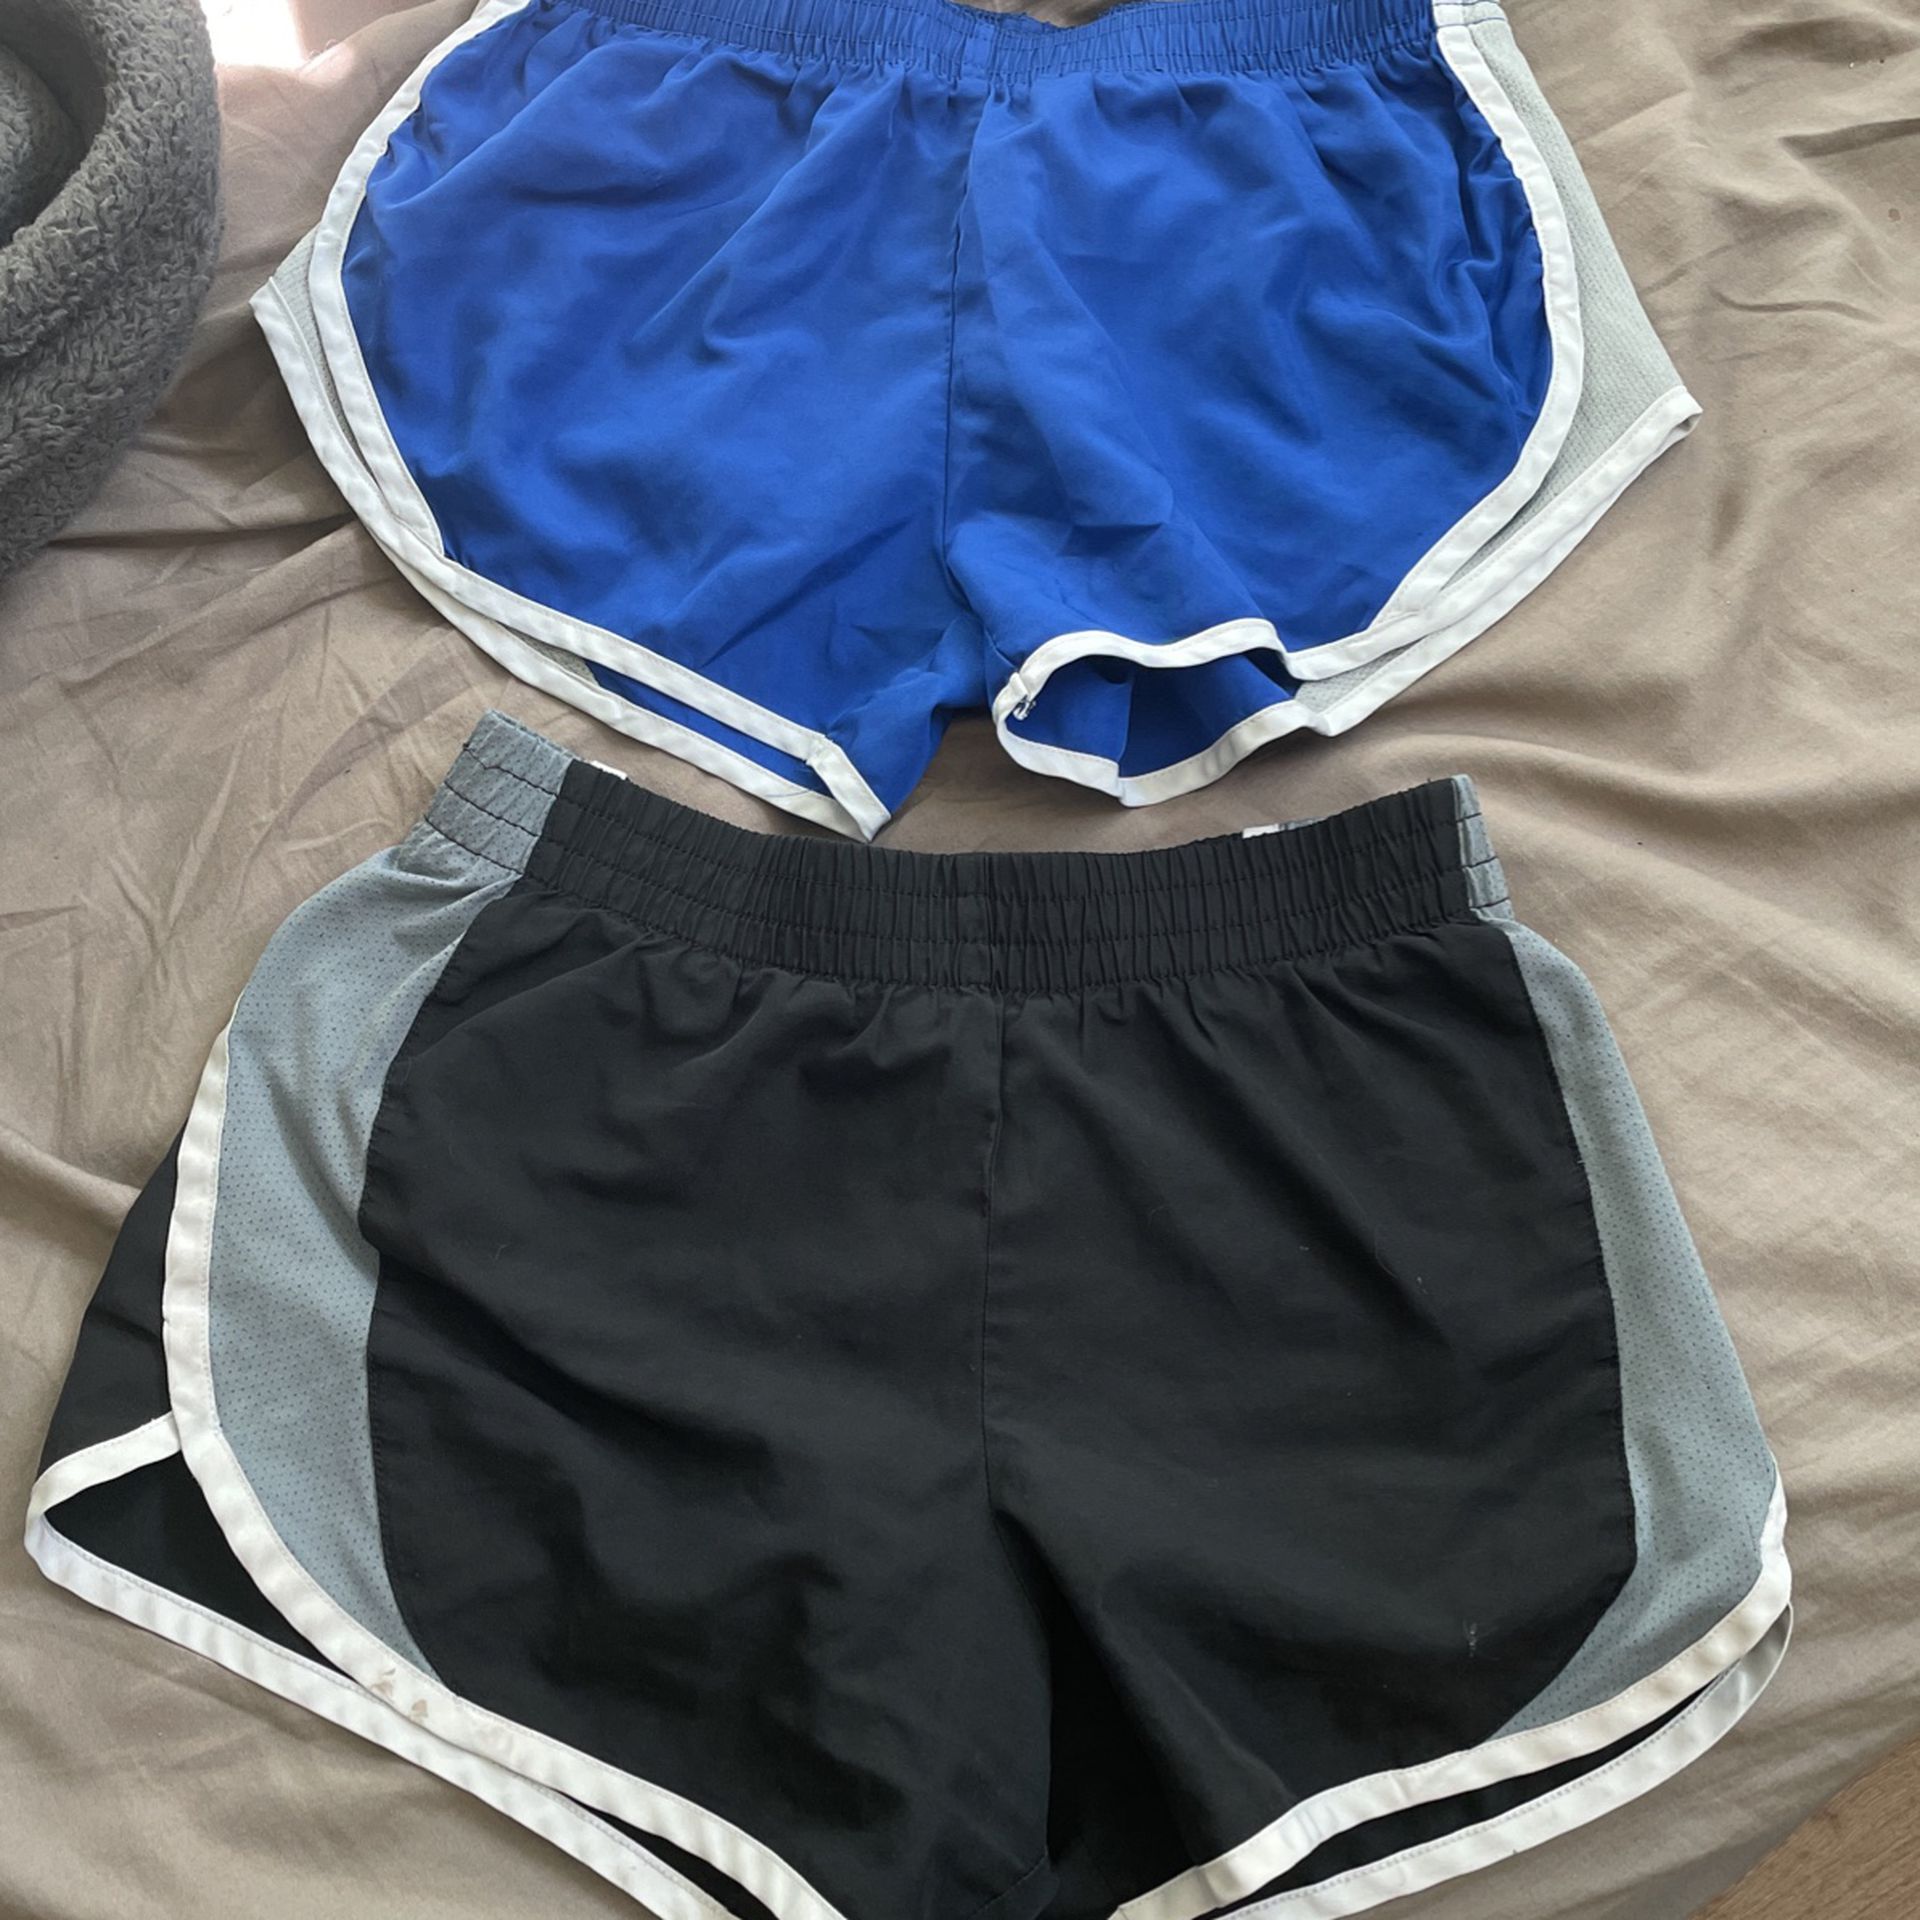 Blue and Black Booty Shorts Bundle